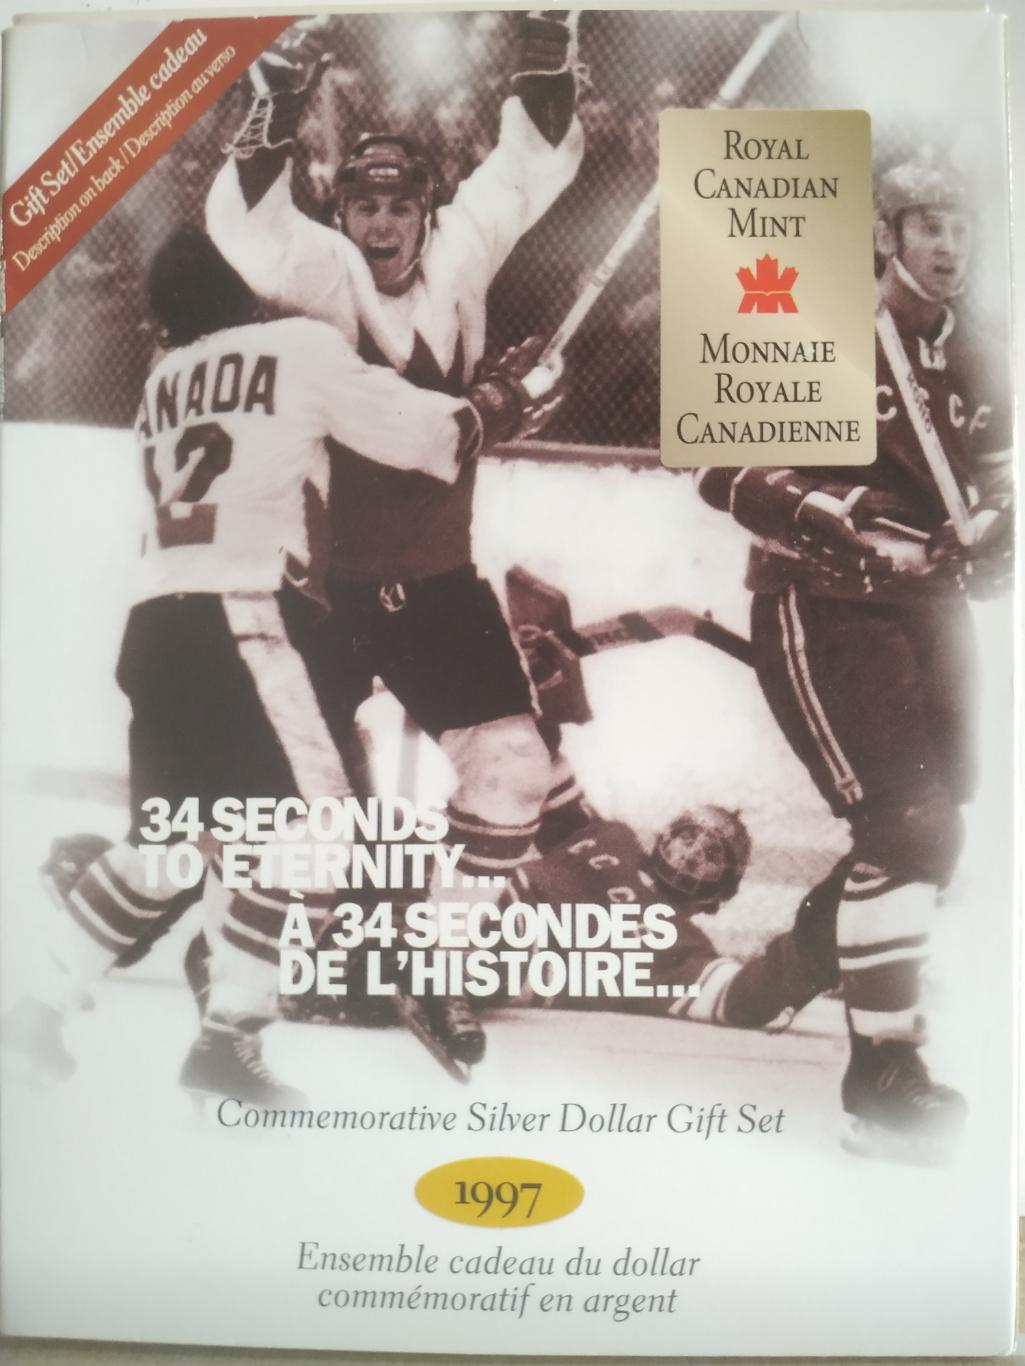 ХОККЕЙ МОНЕТА НХЛ 1972 - 1997 МАТЧ КАНАДА - СССР СУПЕРСЕРИЯ COIN CANADA USSR